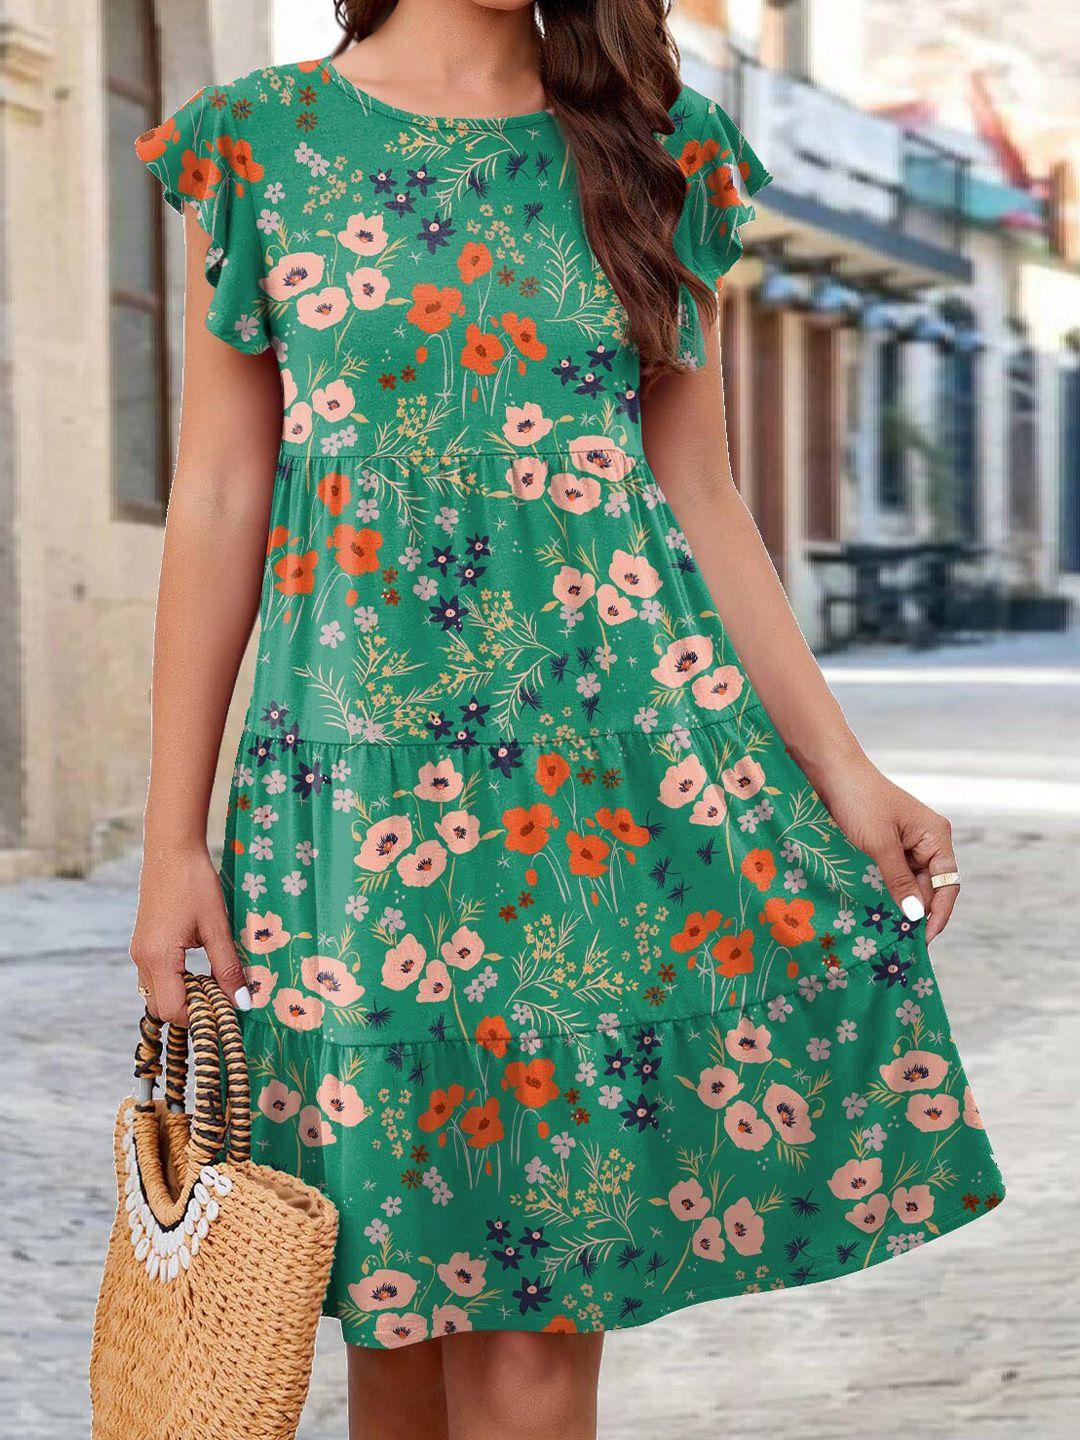 stylecast x kpop green floral print a-line dress